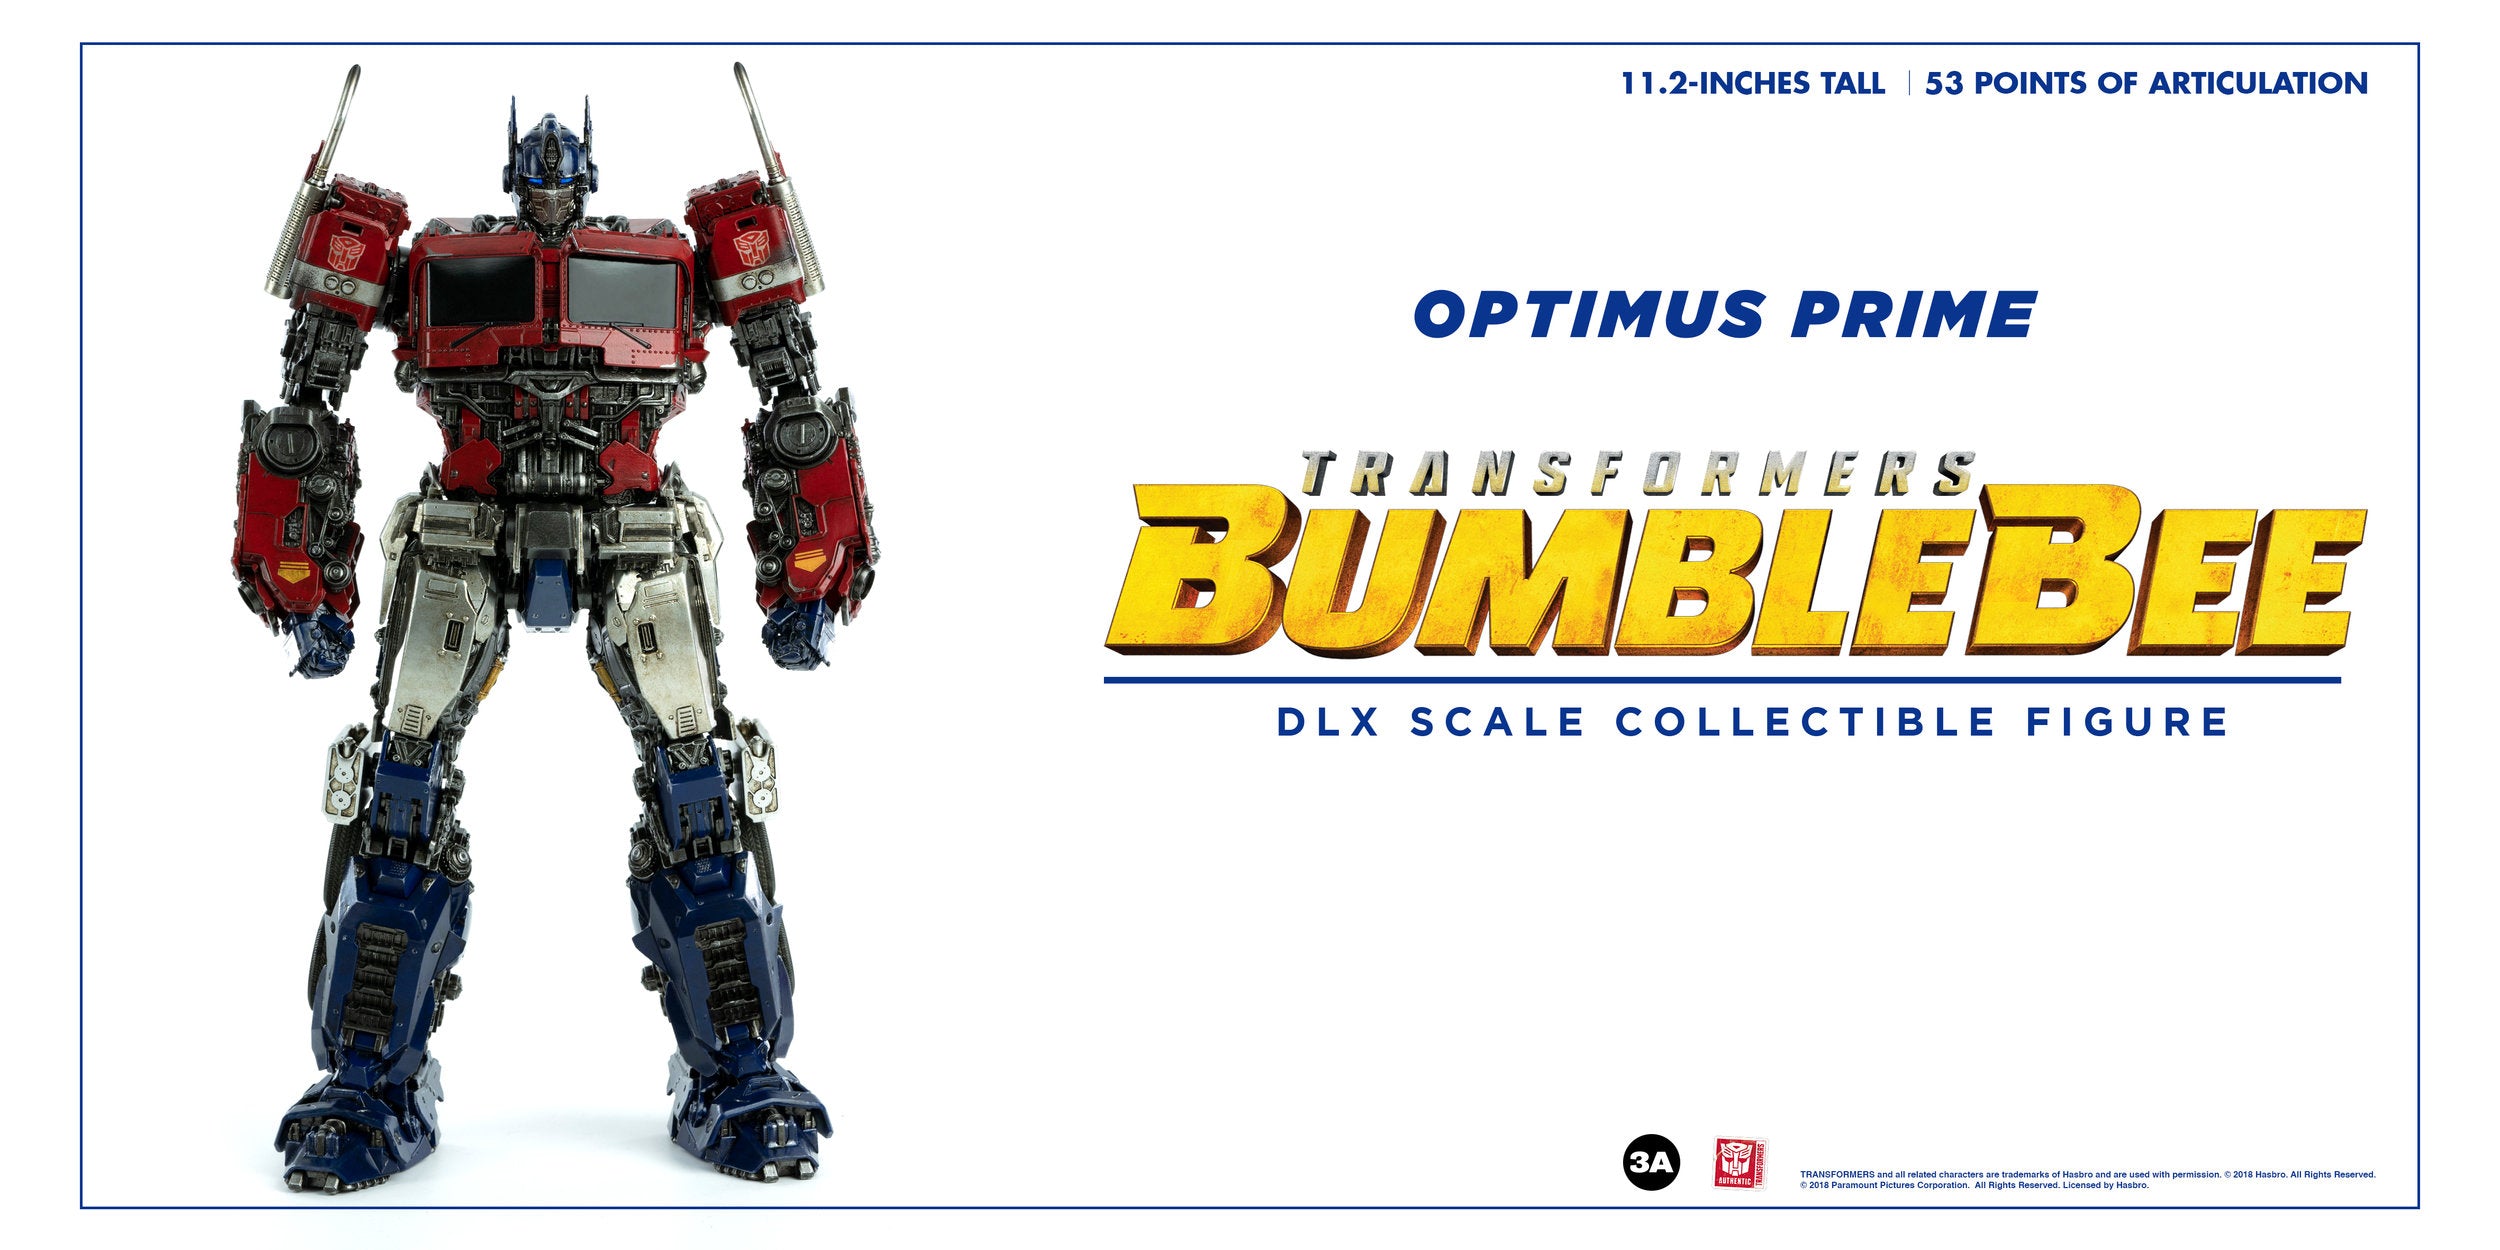 ThreeA - DLX Scale Collectible Series - Transformers: Bumblebee - Optimus Prime - Marvelous Toys